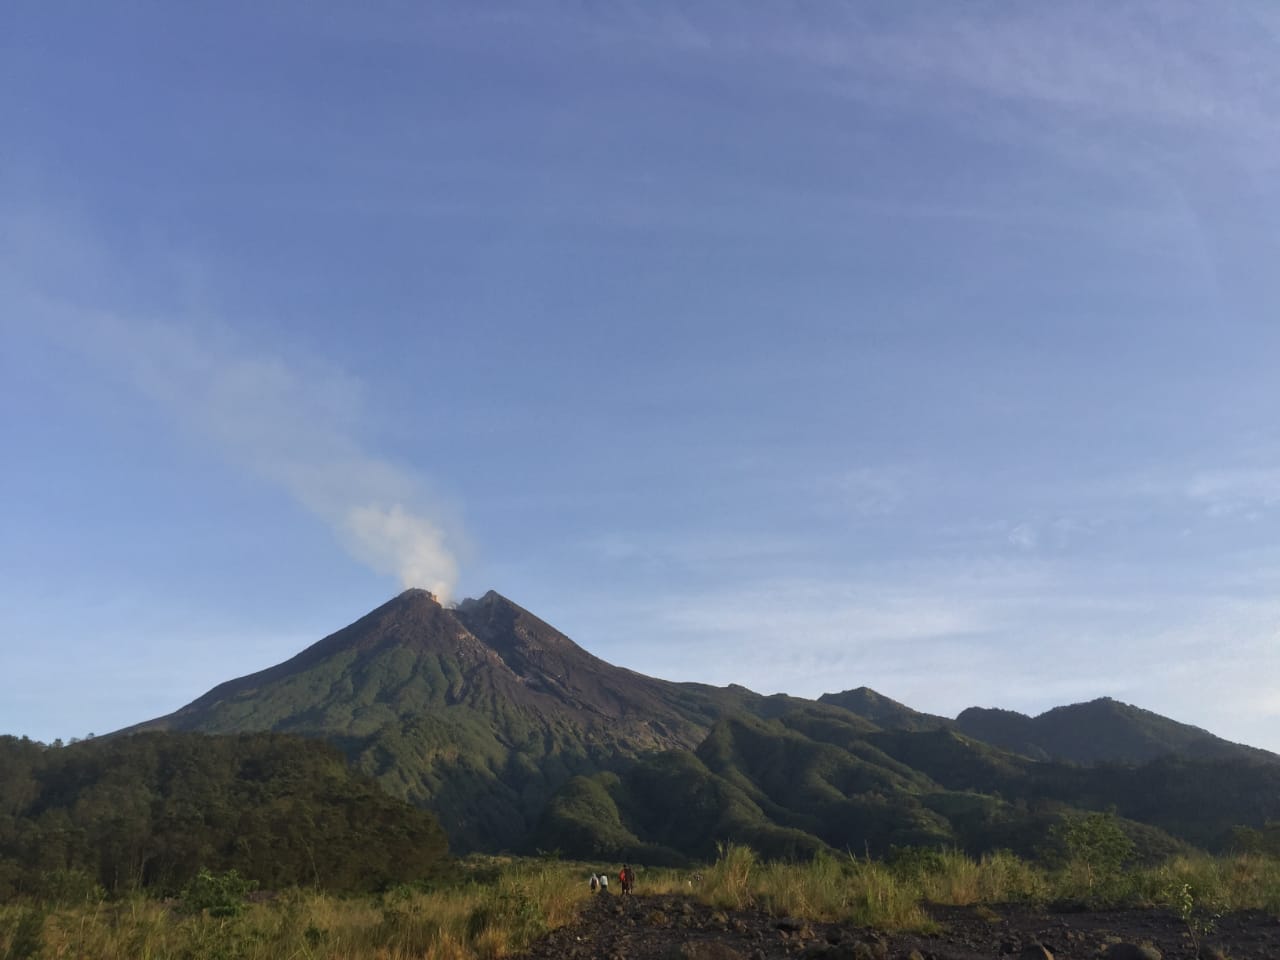 Pusat Vulkanologi: Letusan Merapi 2010 terbesar dalam satu abad terakhir